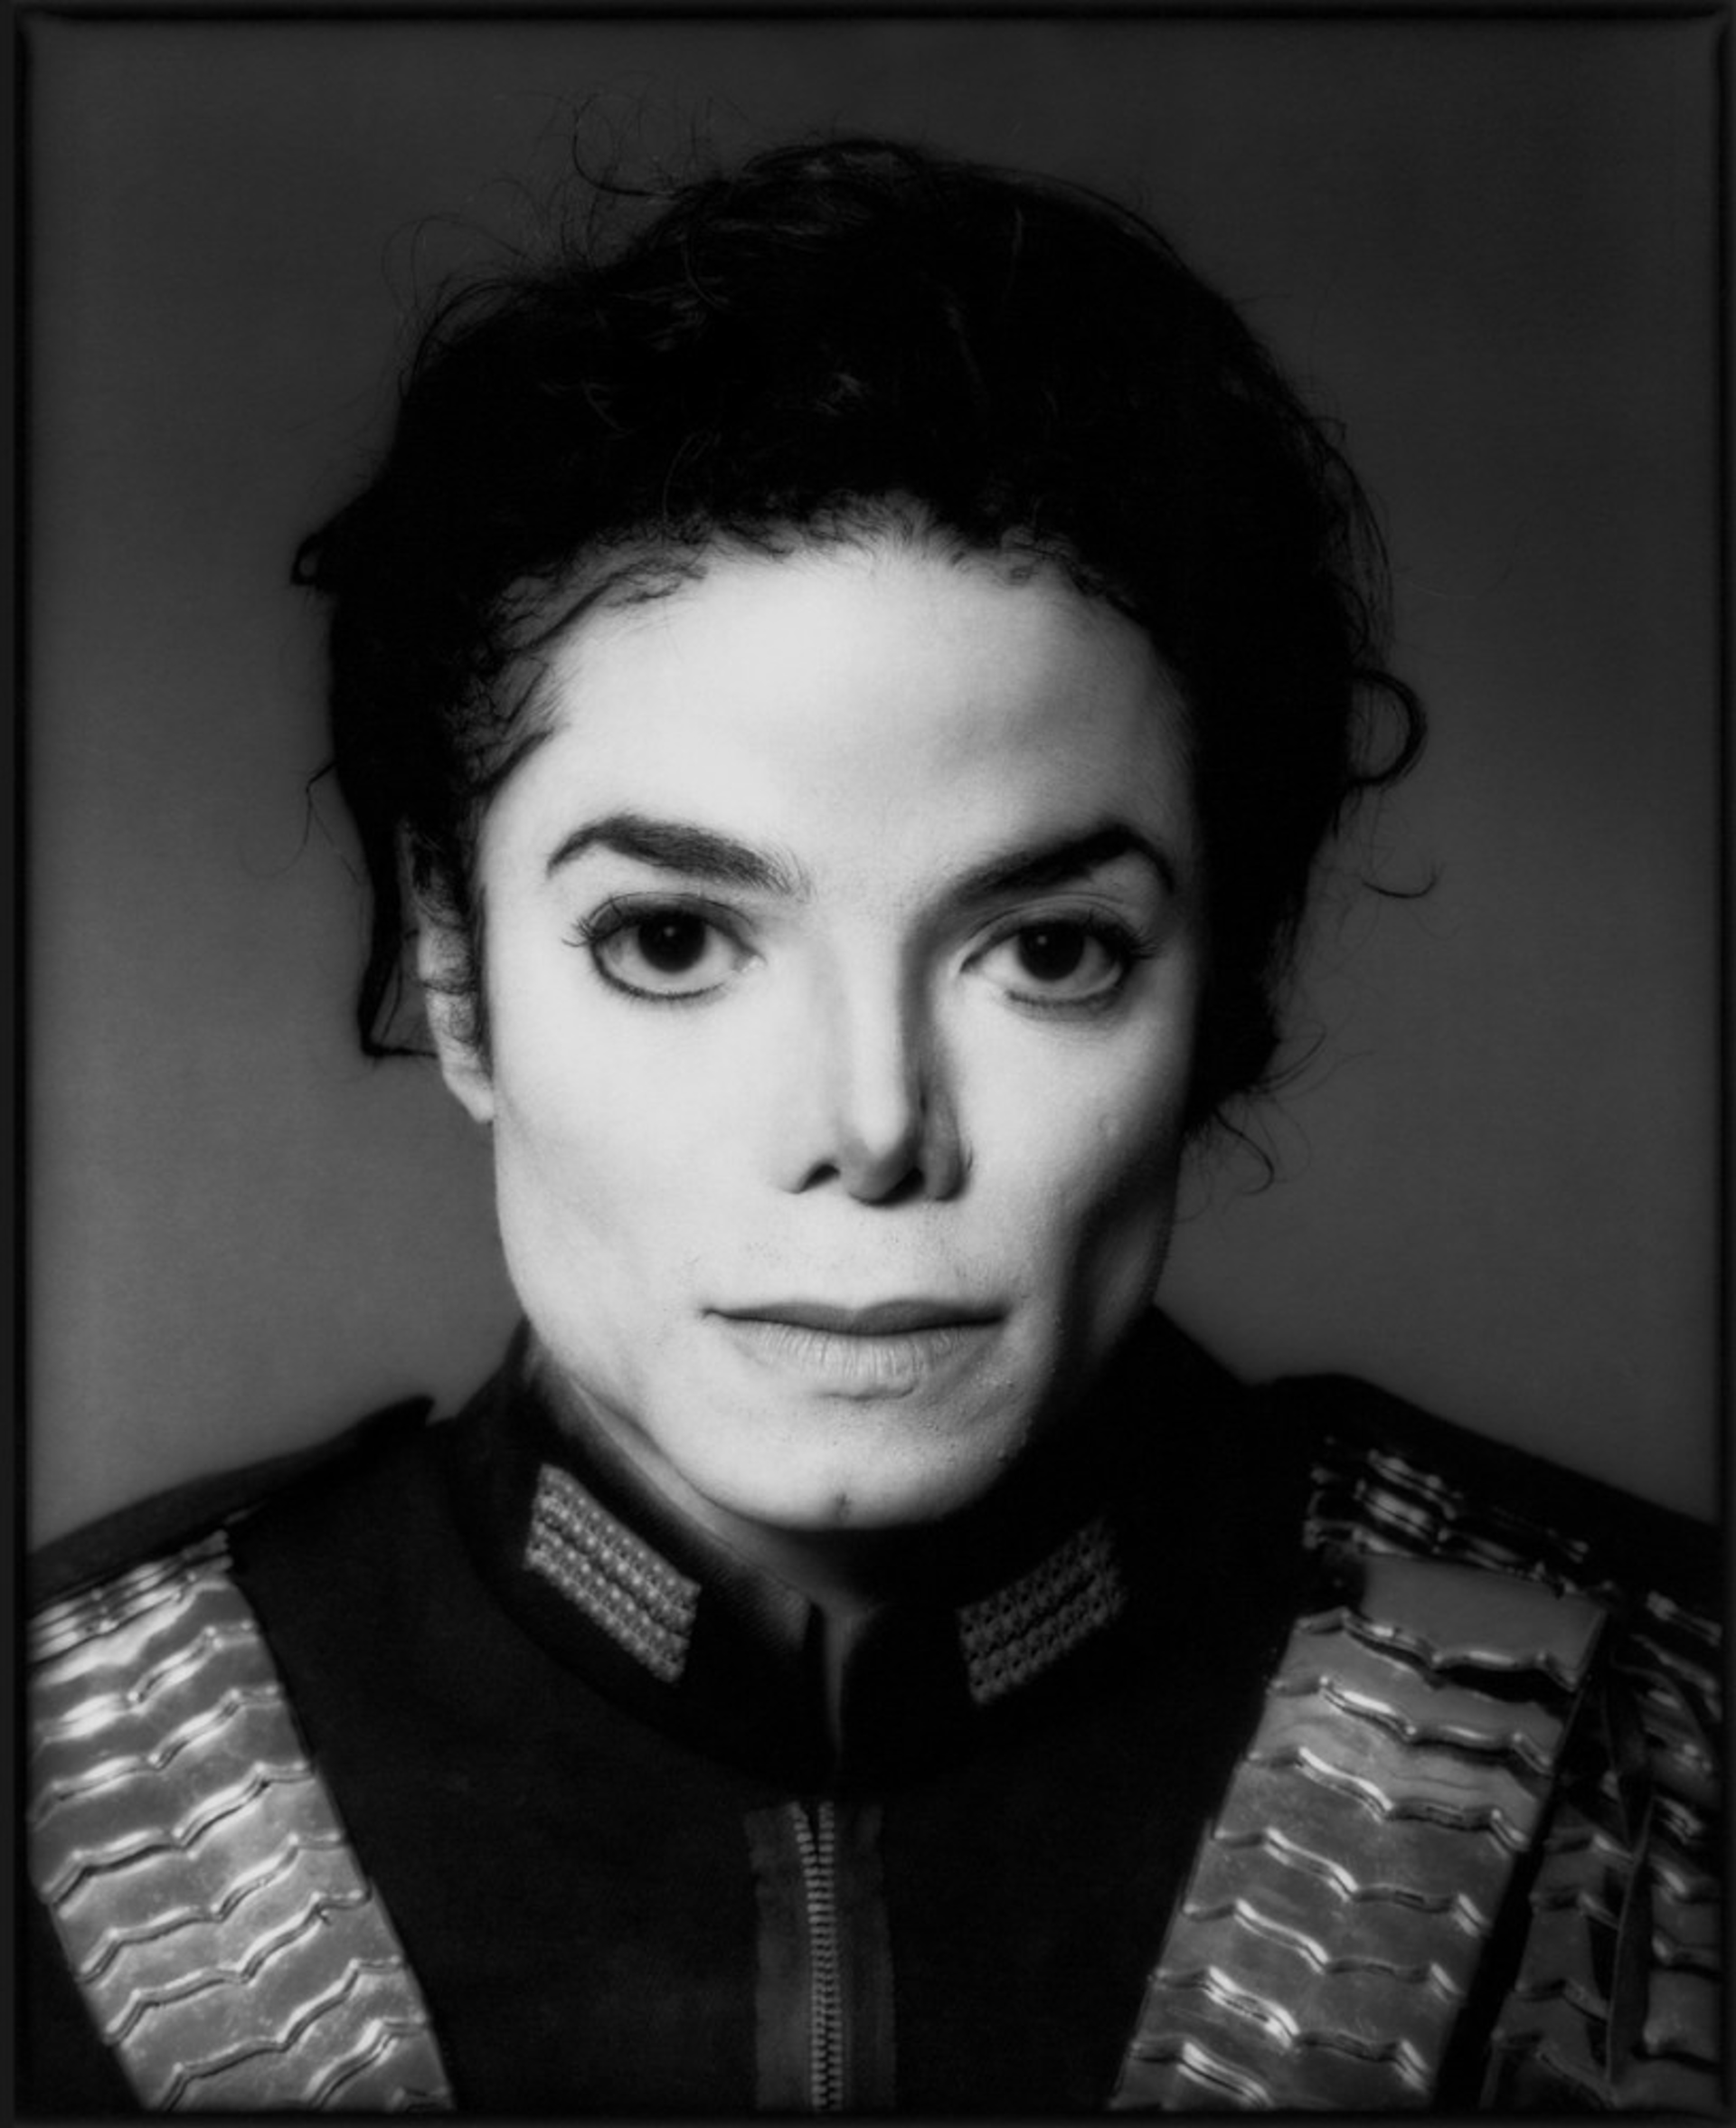 94047 Michael Jackson Headshot BW by Timothy White